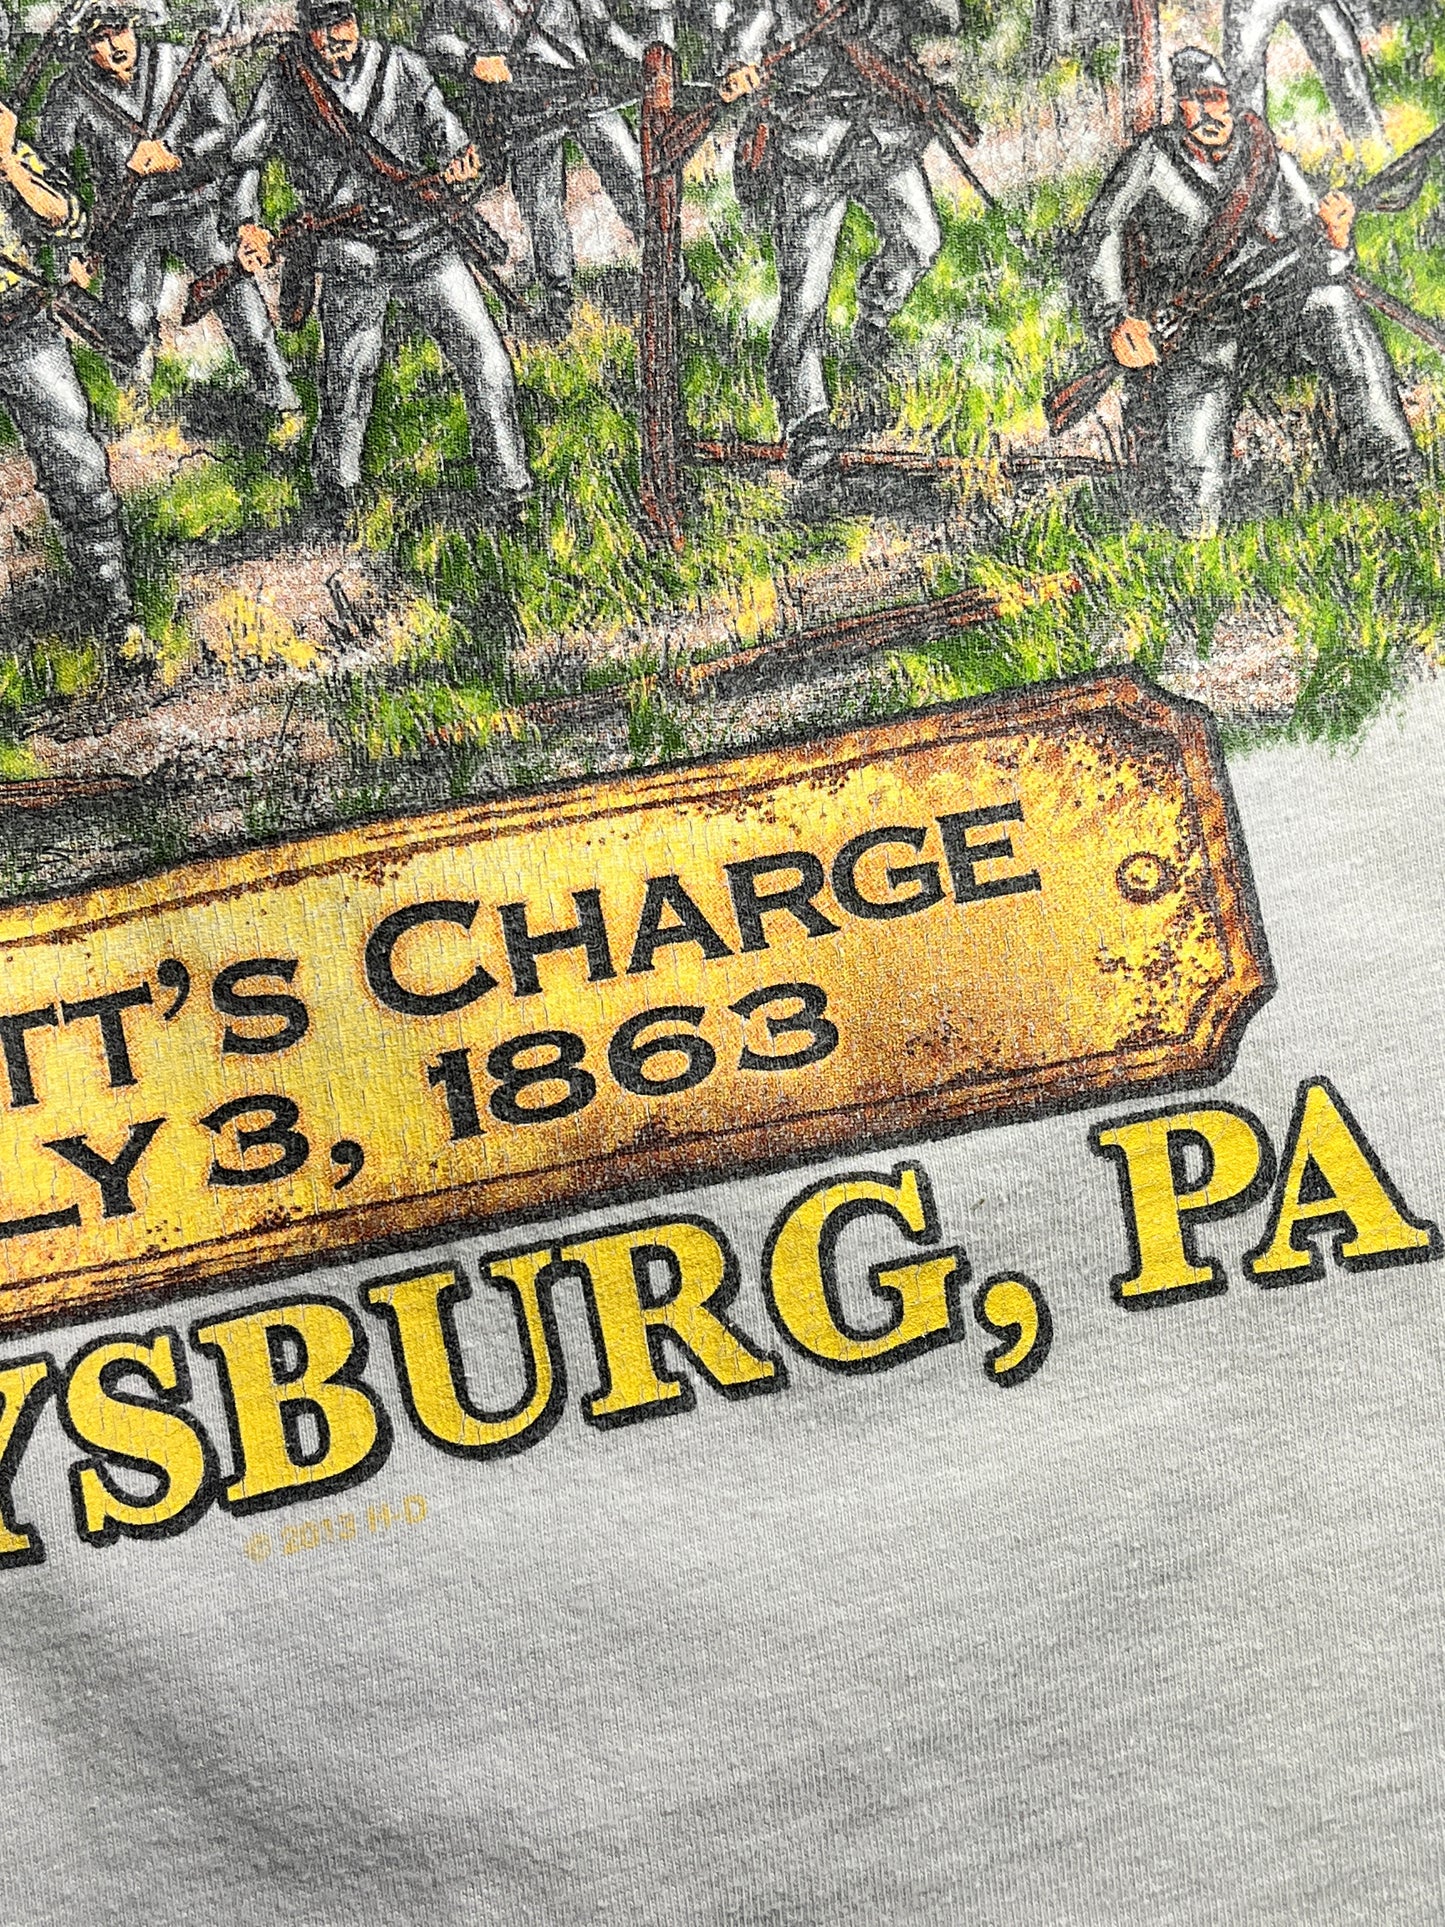 Vintage Harley Davidson T-Shirt Gettysburg Picket's Charge